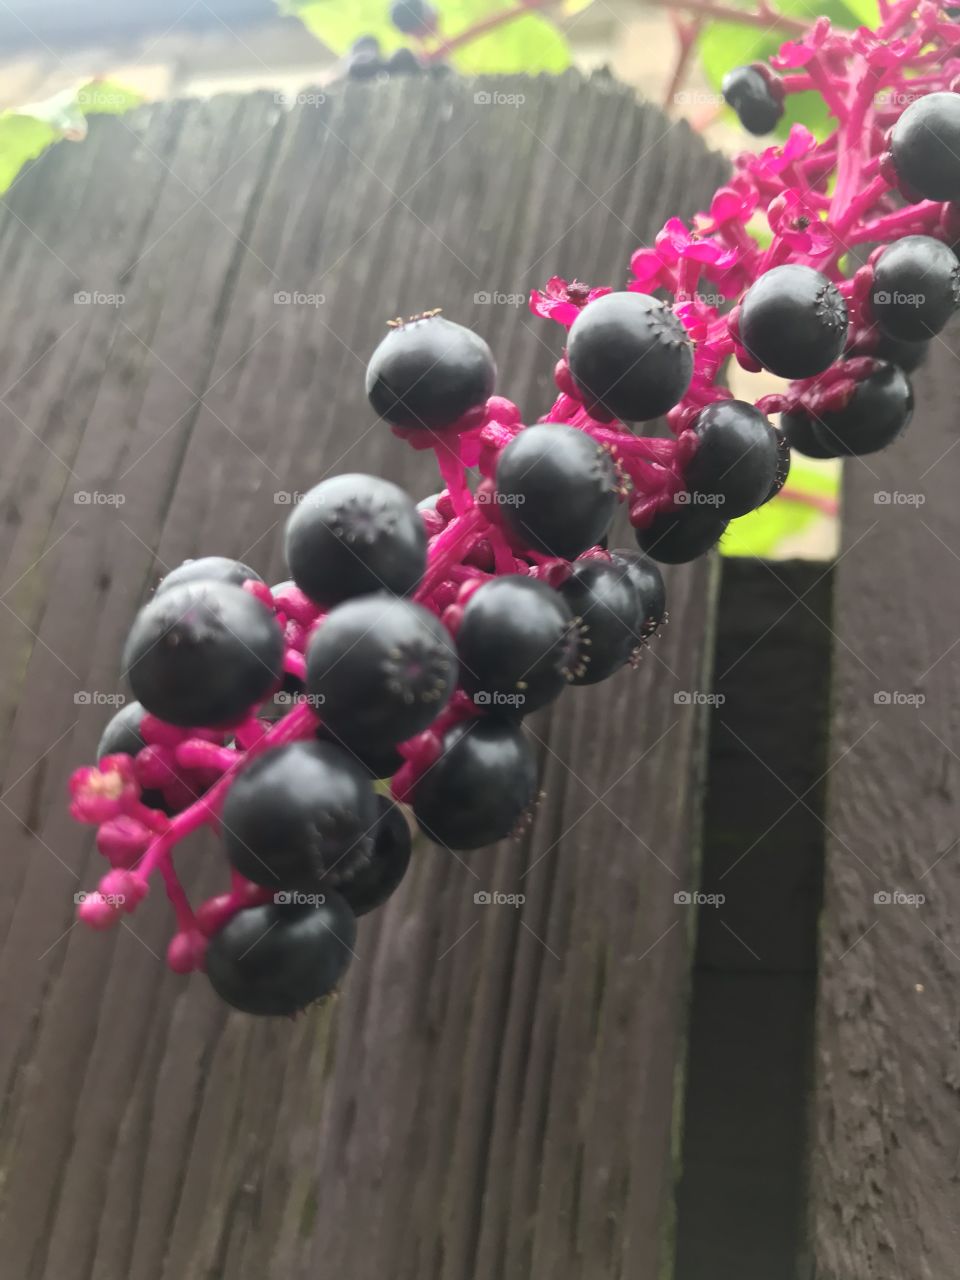 Berries 